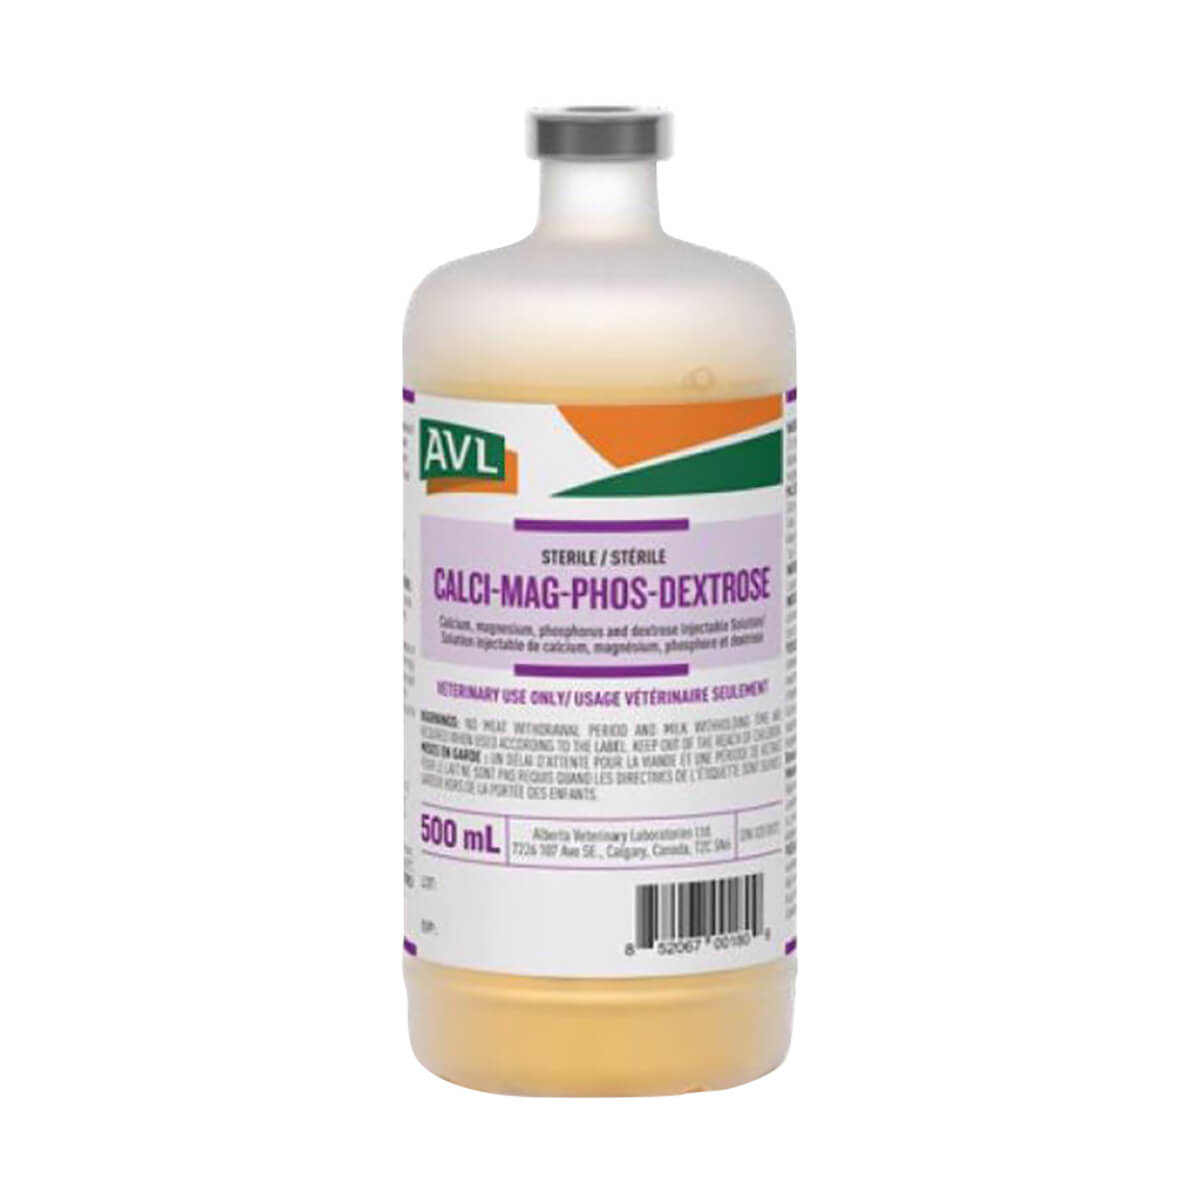 Calci-Mag-Phos-Dextrose Injectable Solution - 500 ml